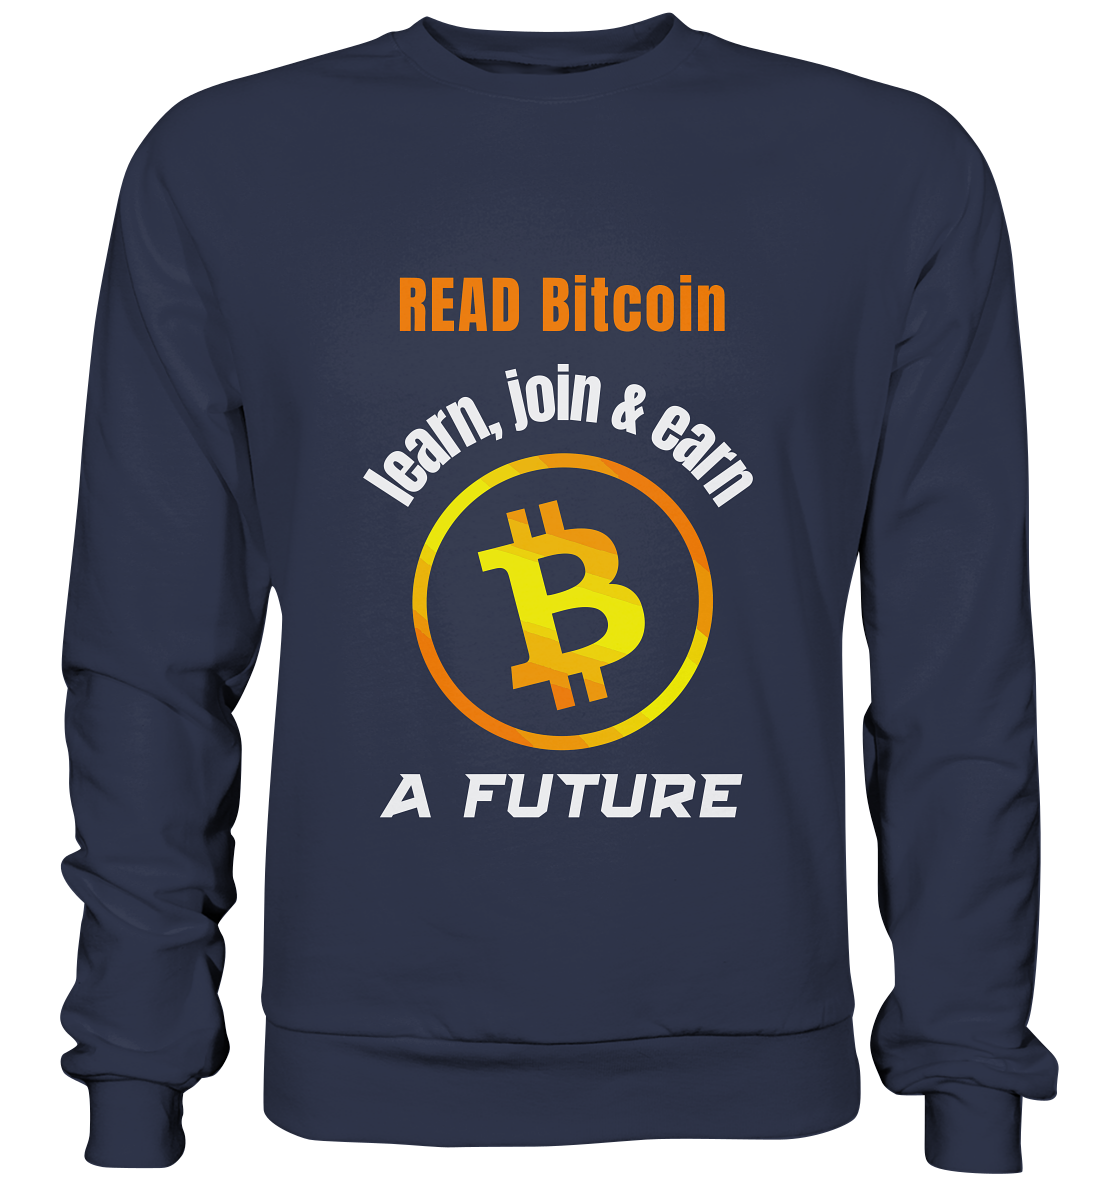 READ BITCOIN, learn & earn A FUTURE - Premium Sweatshirt